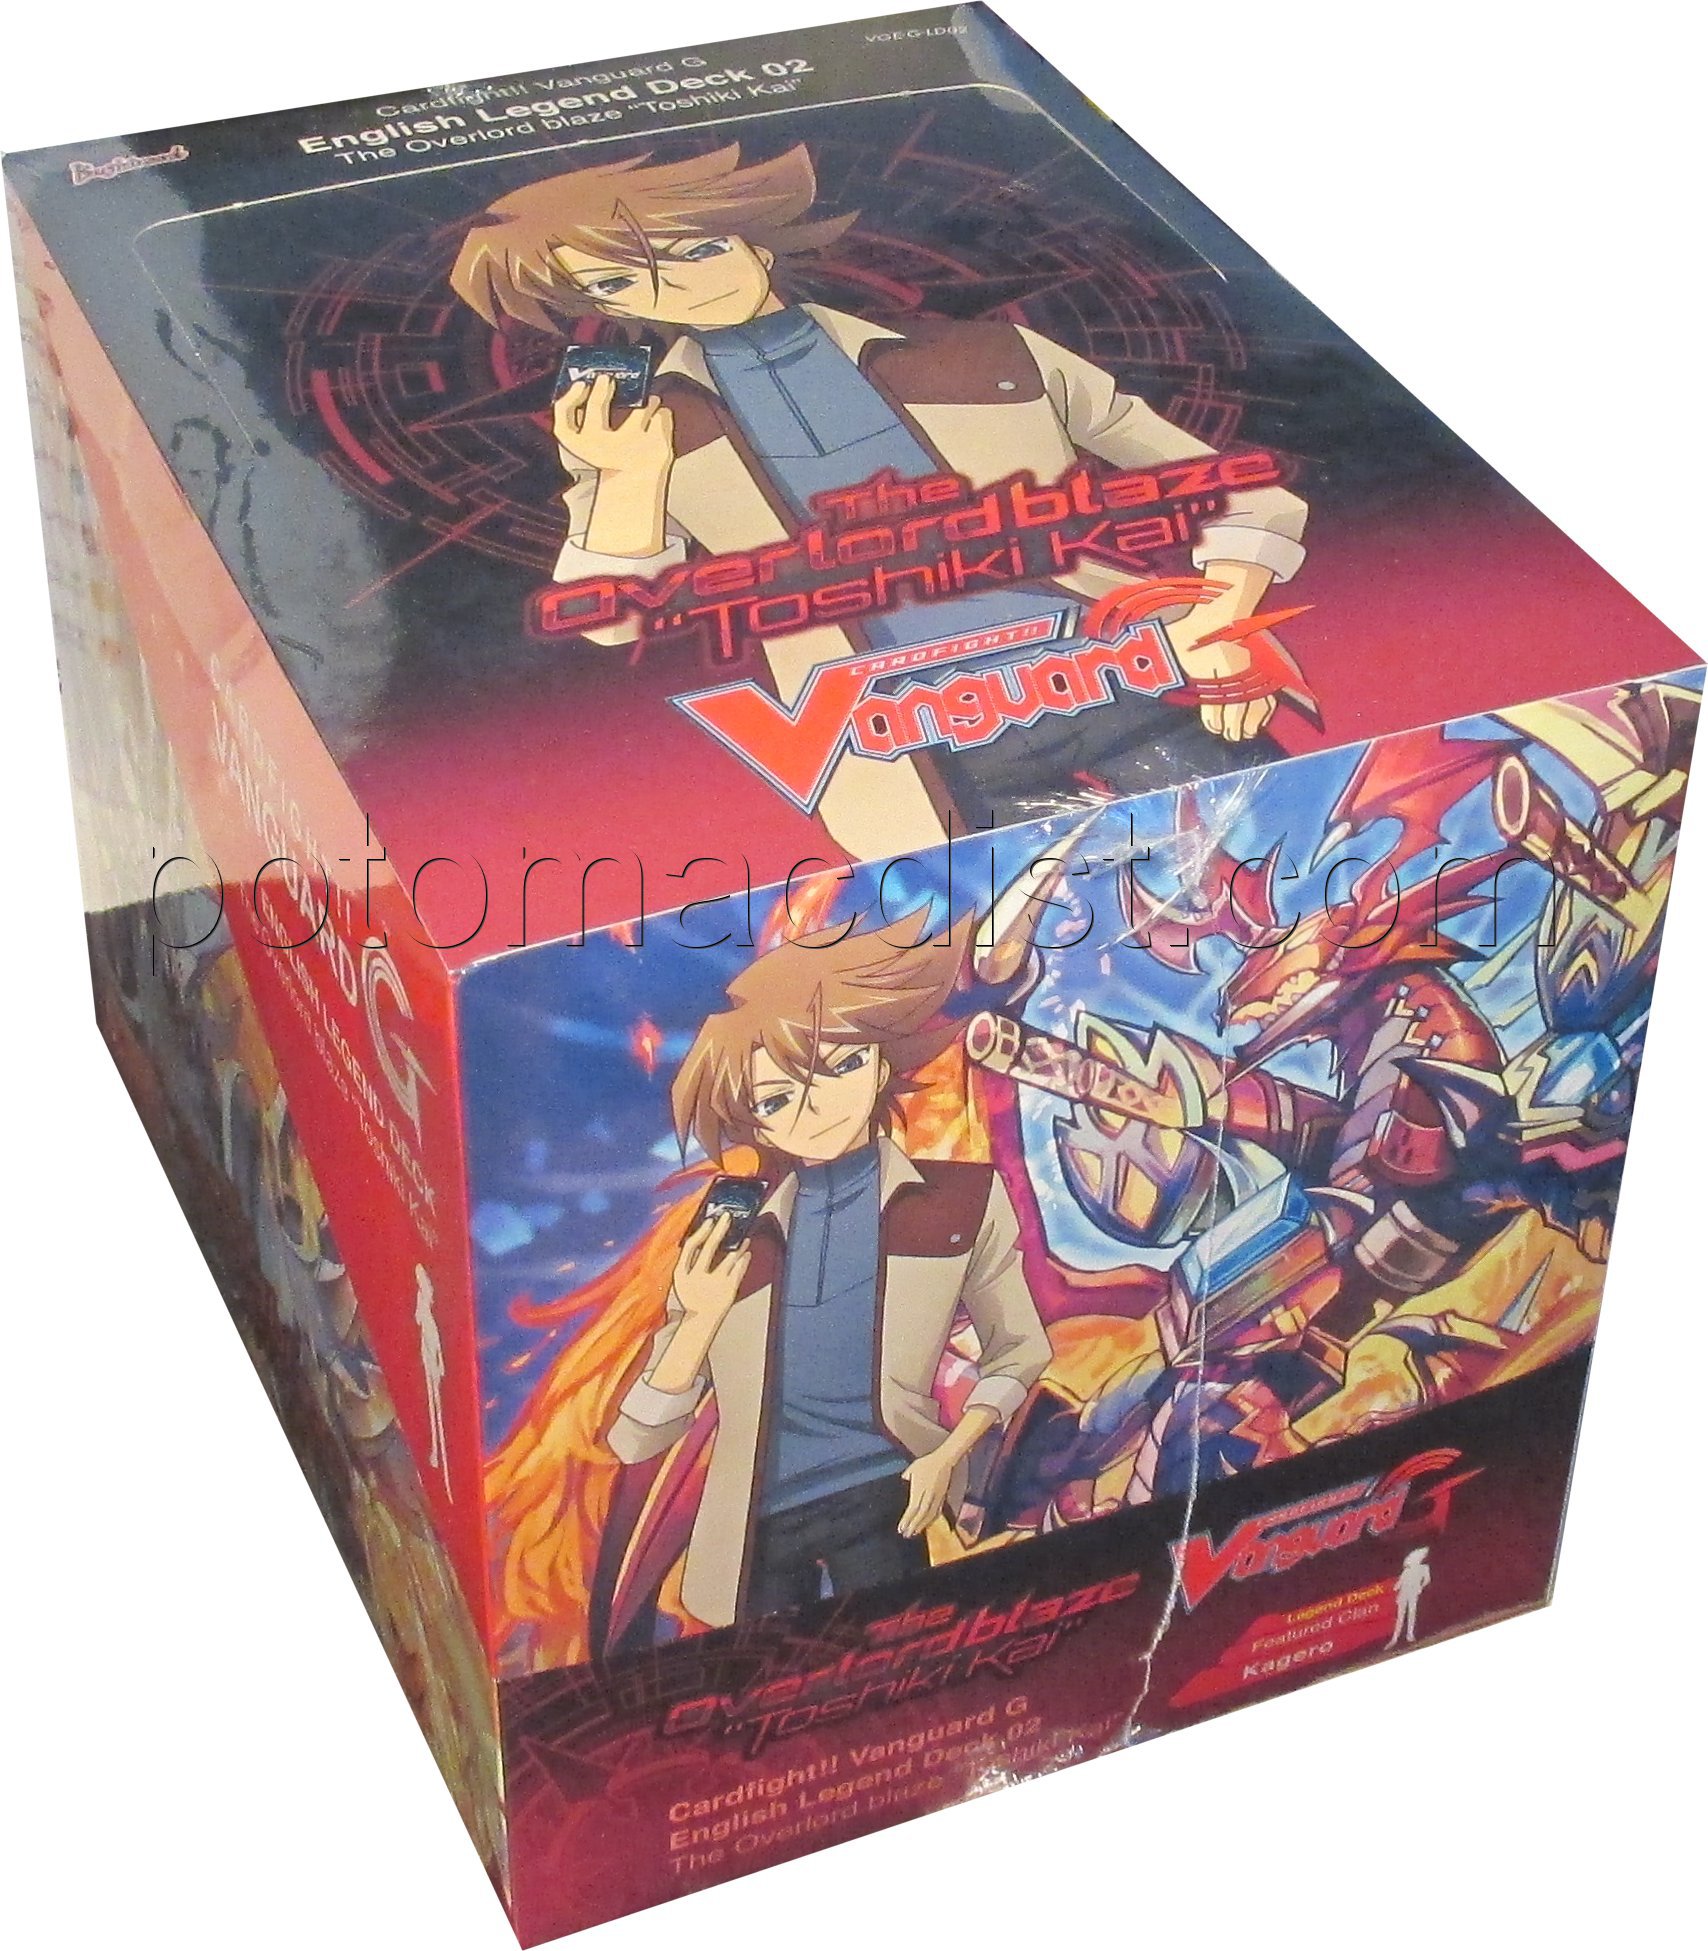 The Overlord blaze "Toshiki Kai" Vanguard G Legend Deck 2 Deck Box 